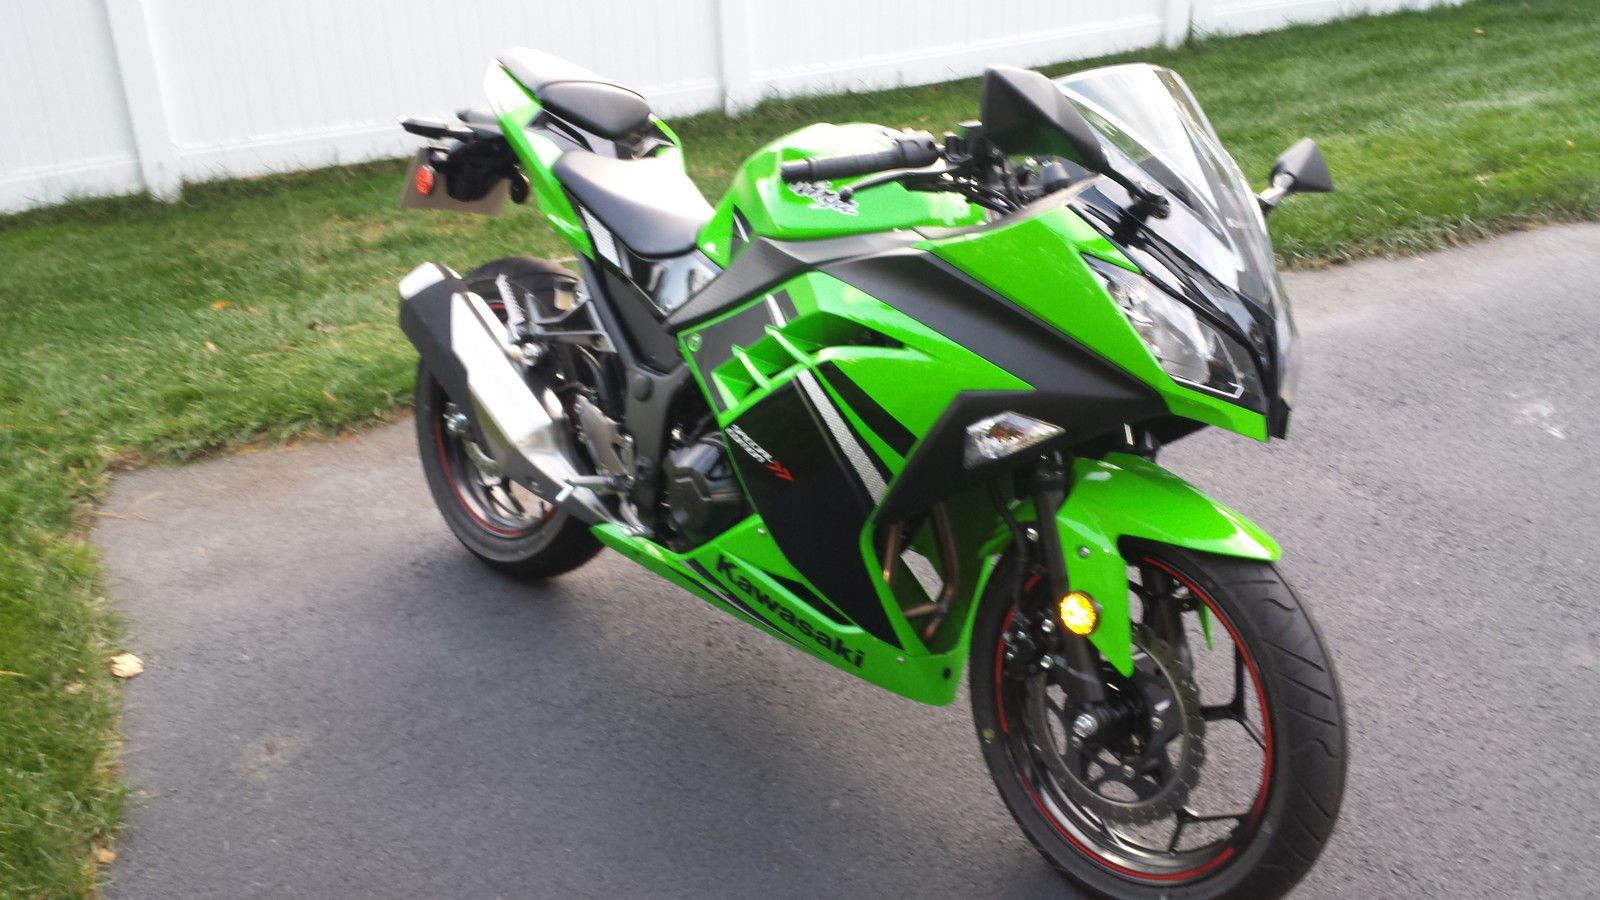 tjener Bi at styre 2014 Kawasaki Ninja 300 Special Edition, Green